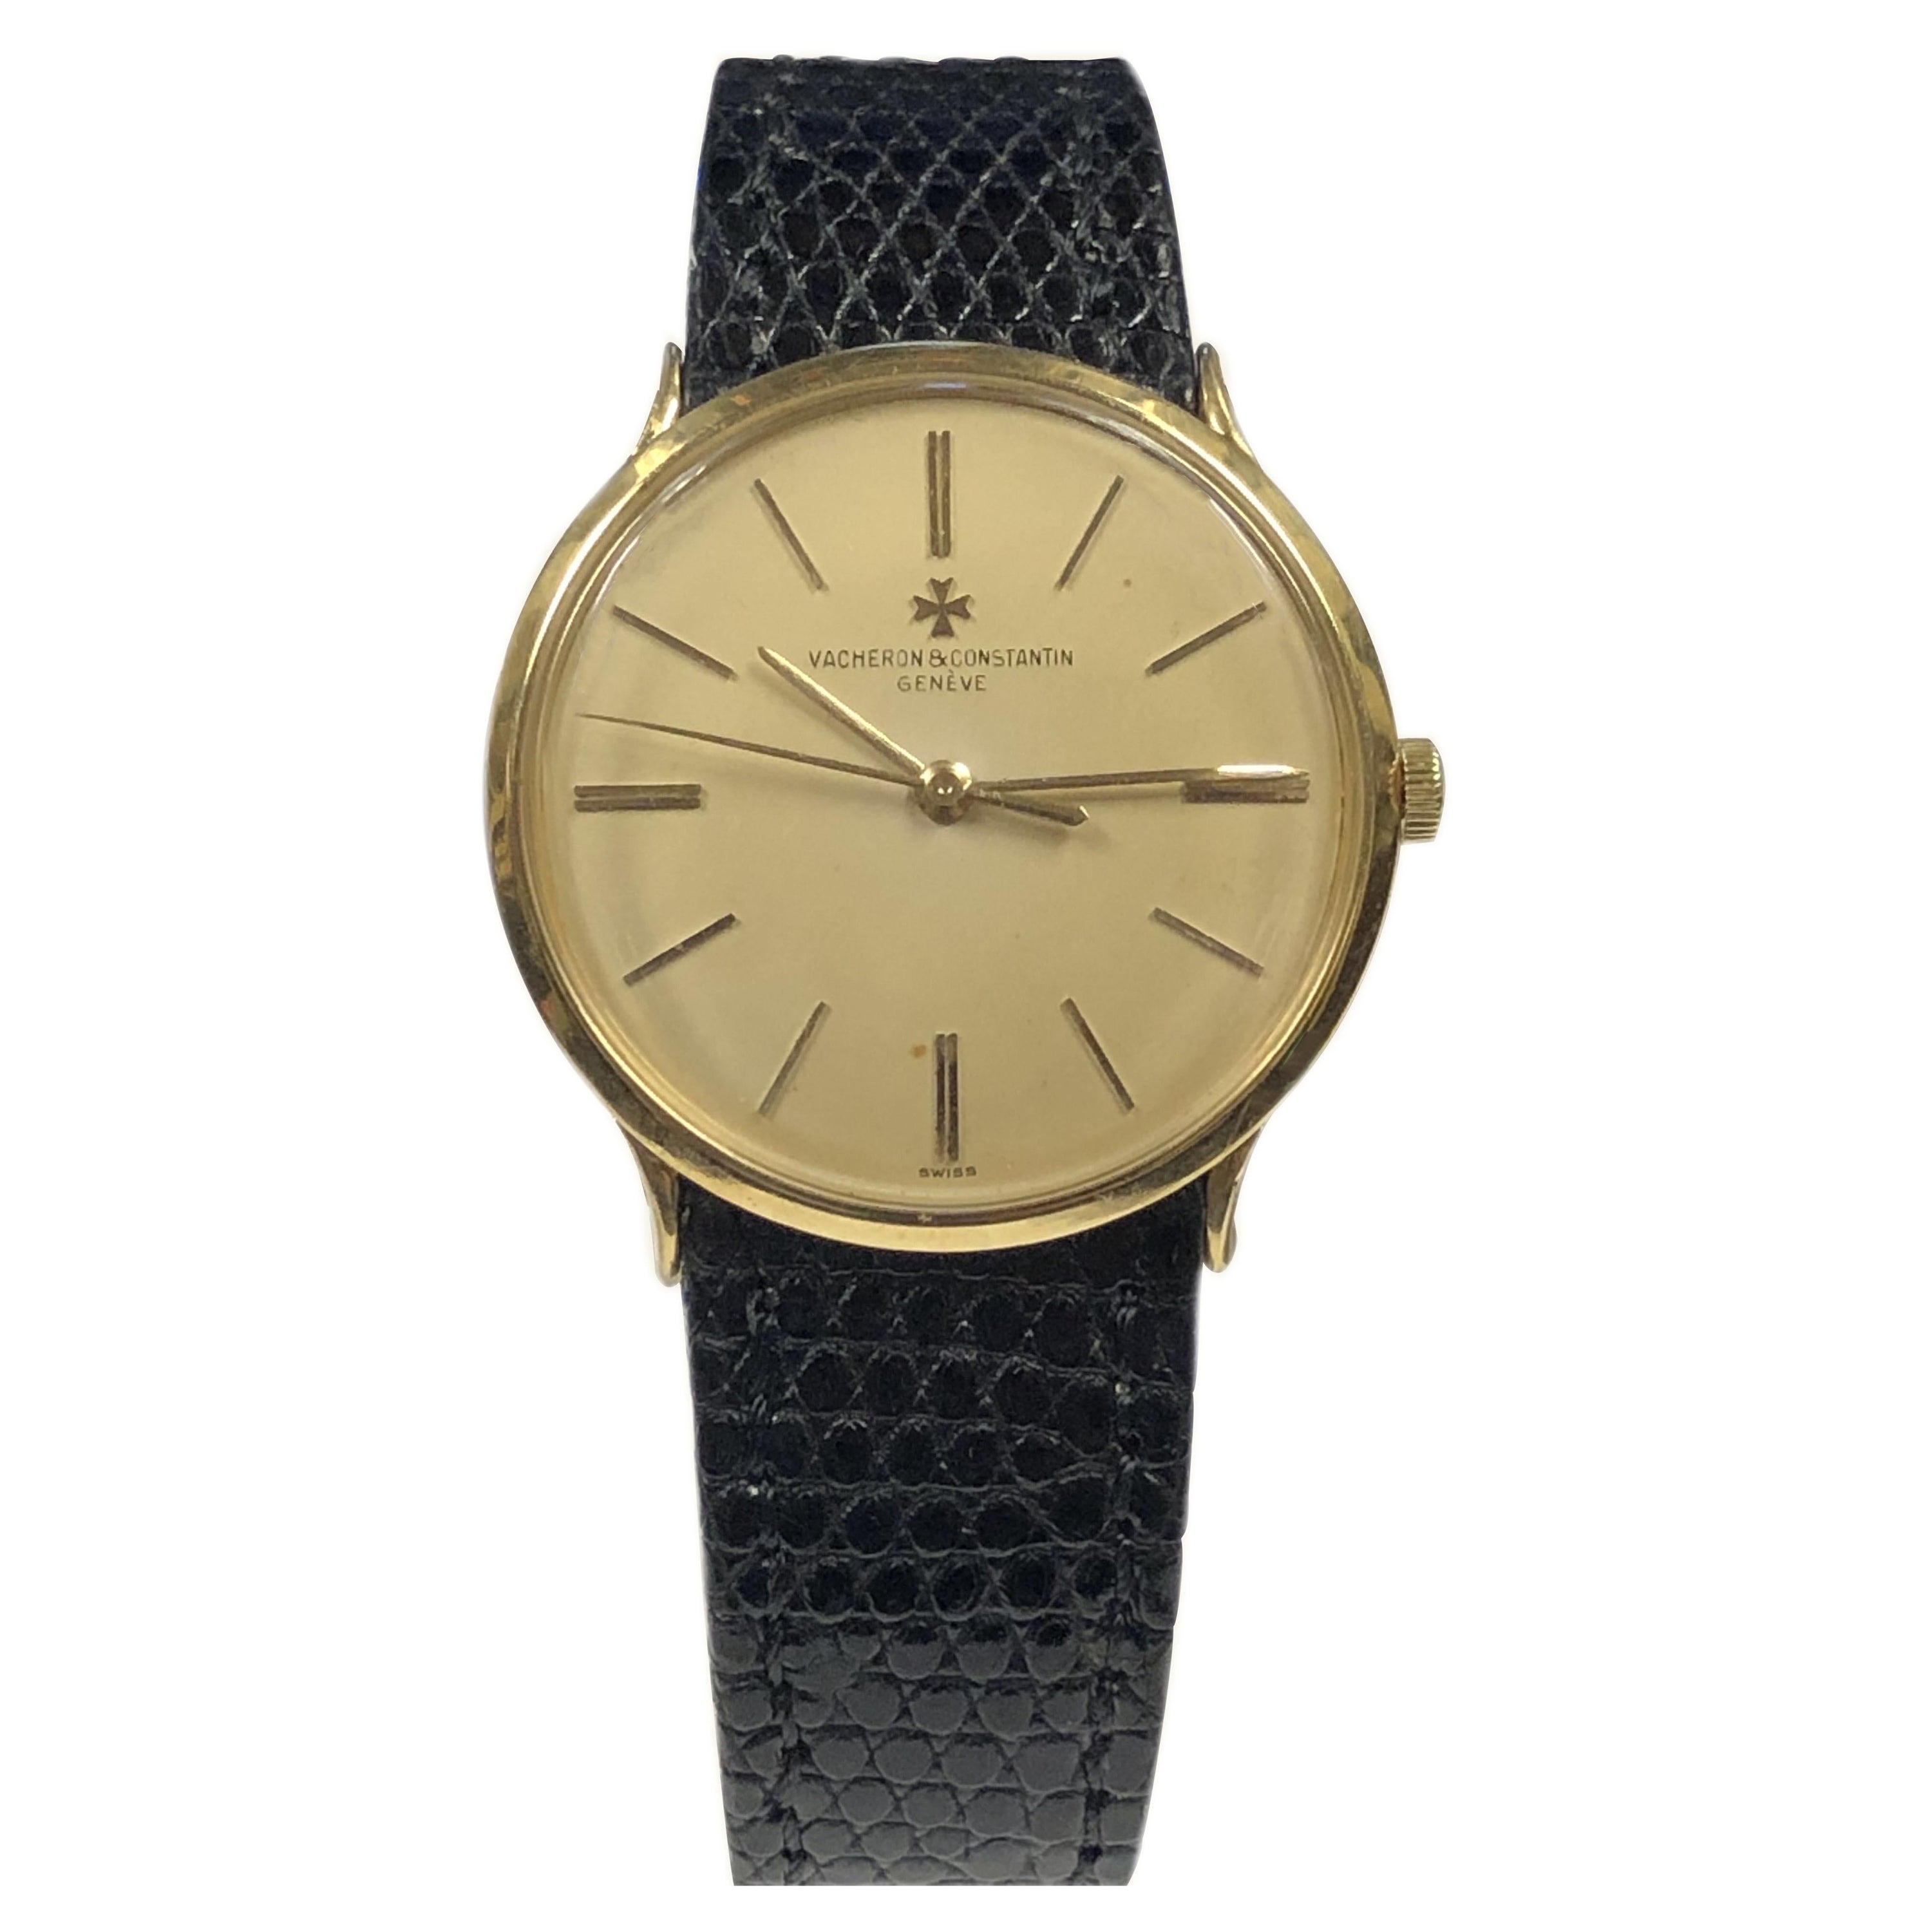 Vacheron & Constantin Ref 6182 Vintage Yellow Gold Manual wind Wrist Watch